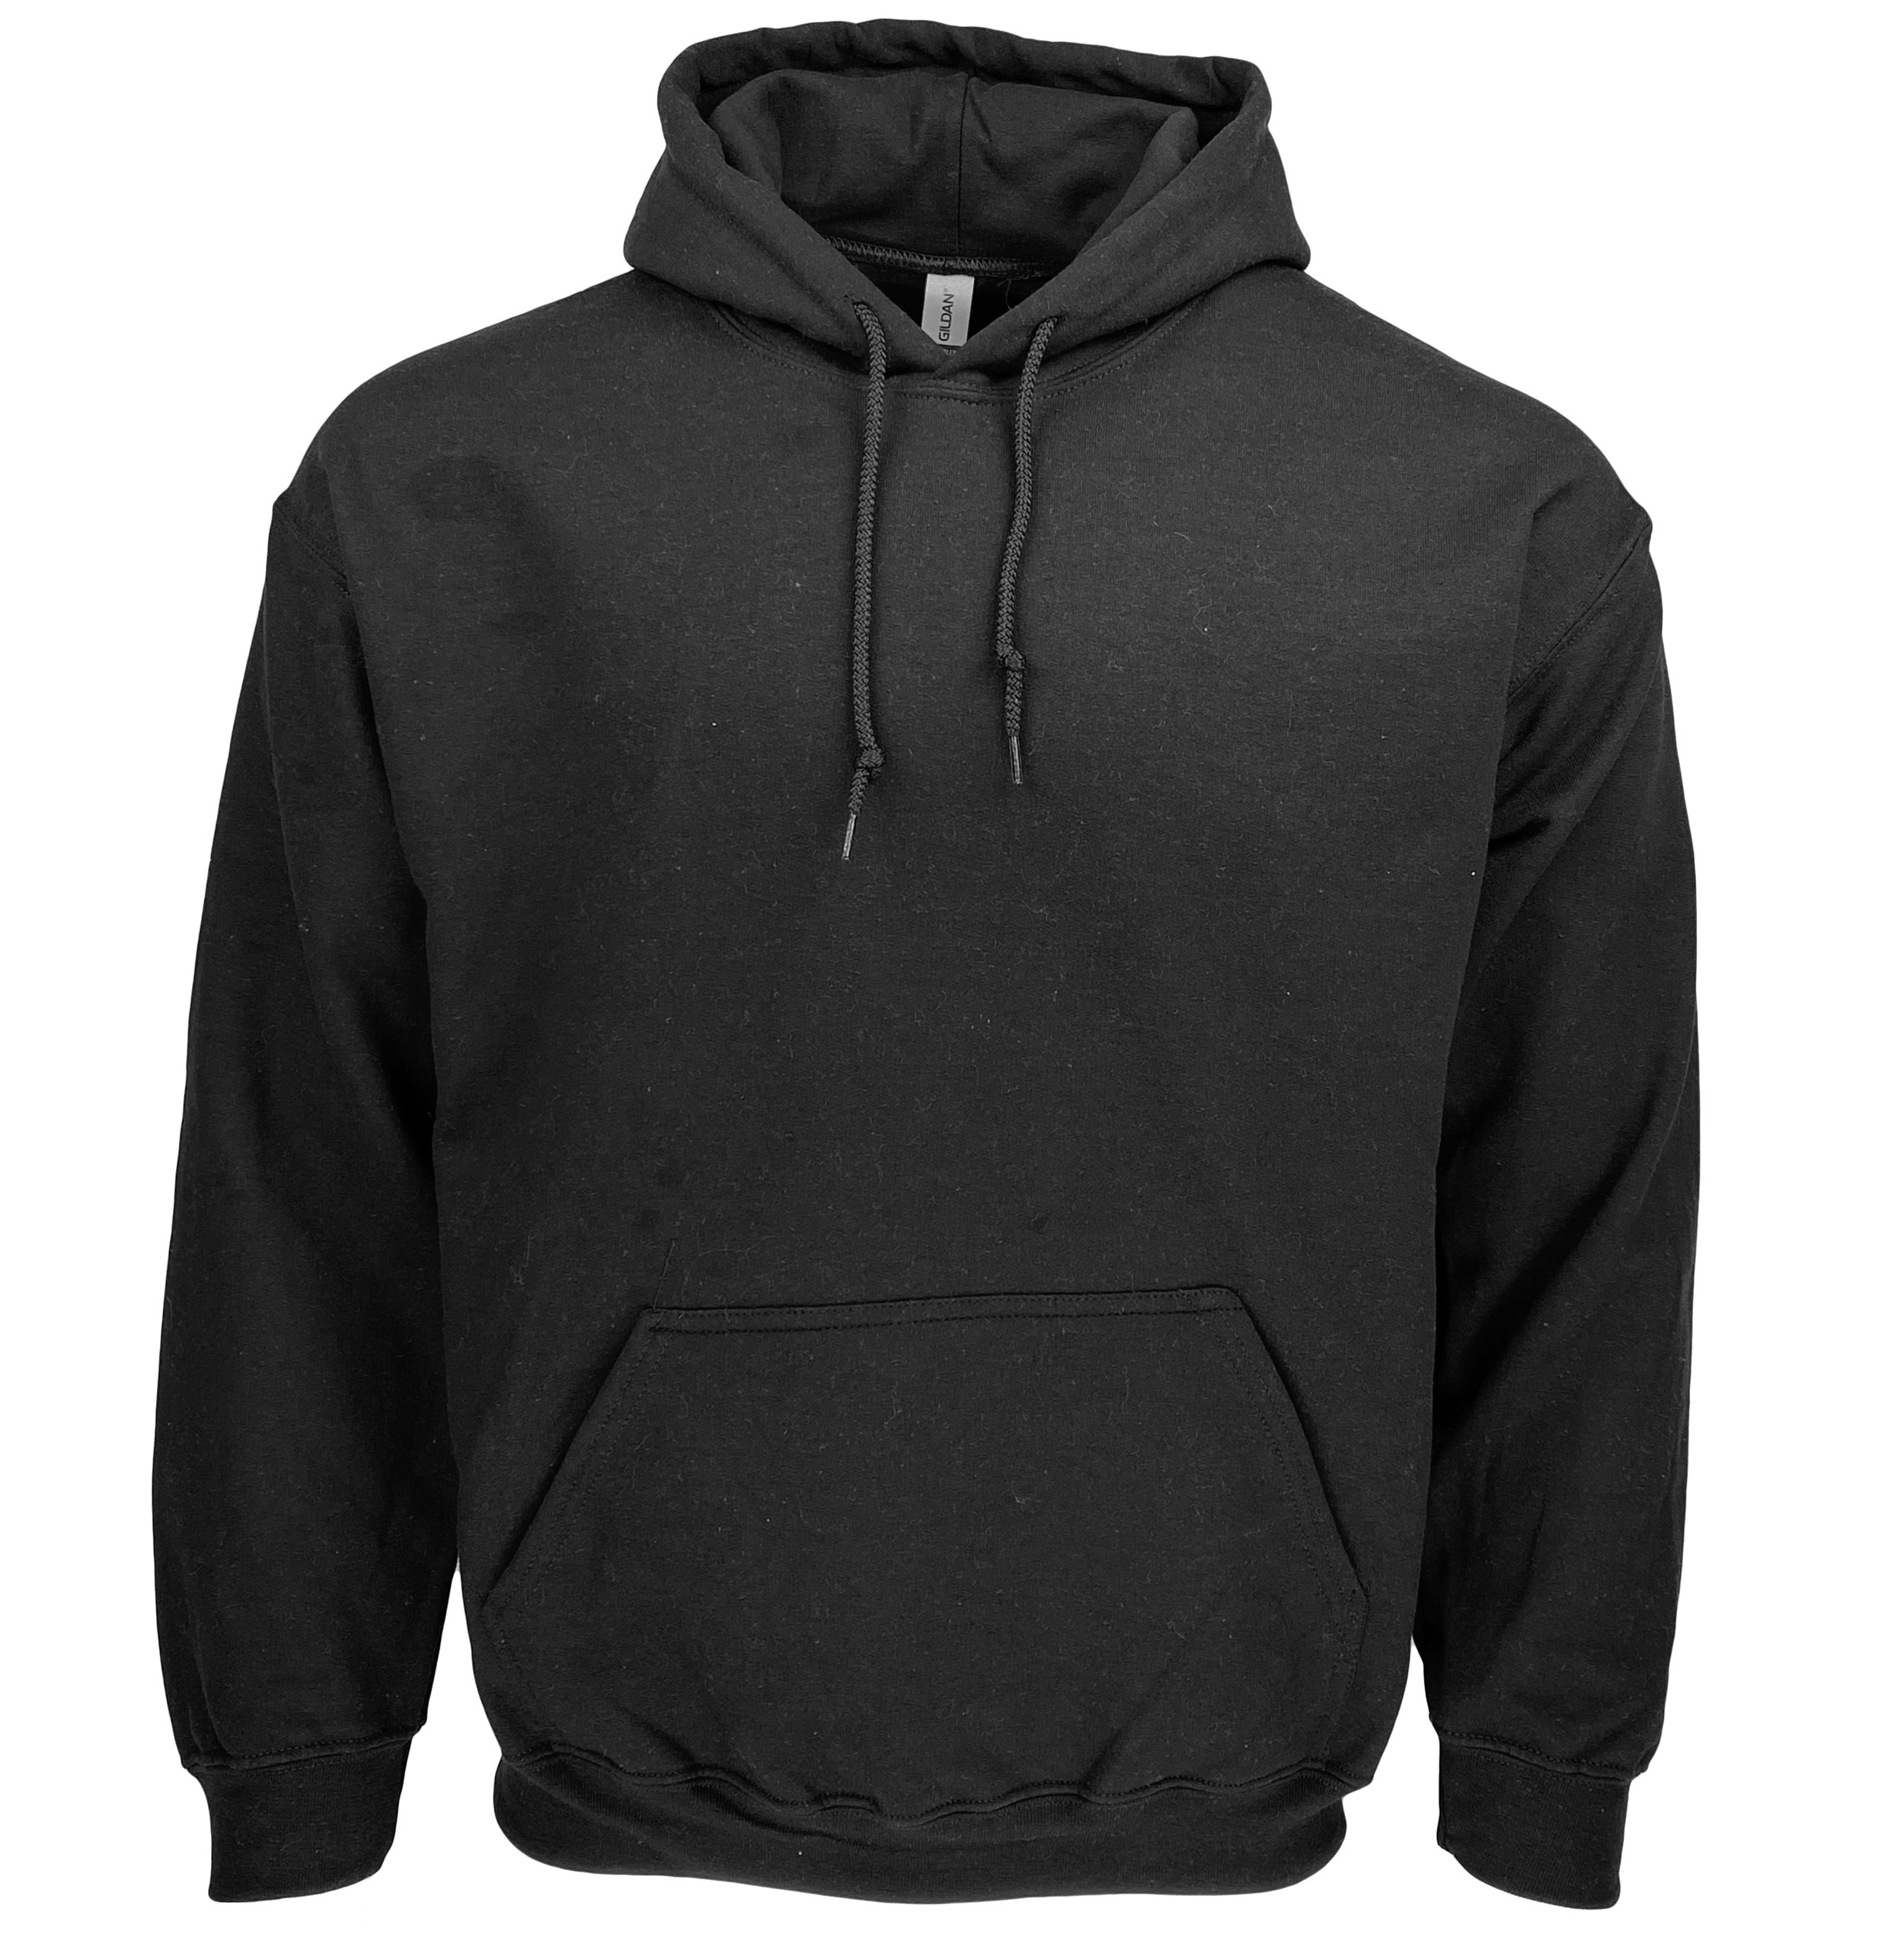 Style 185BK | Wholesale Gildan Mens Black Pullover Hoodies - Slightly ...